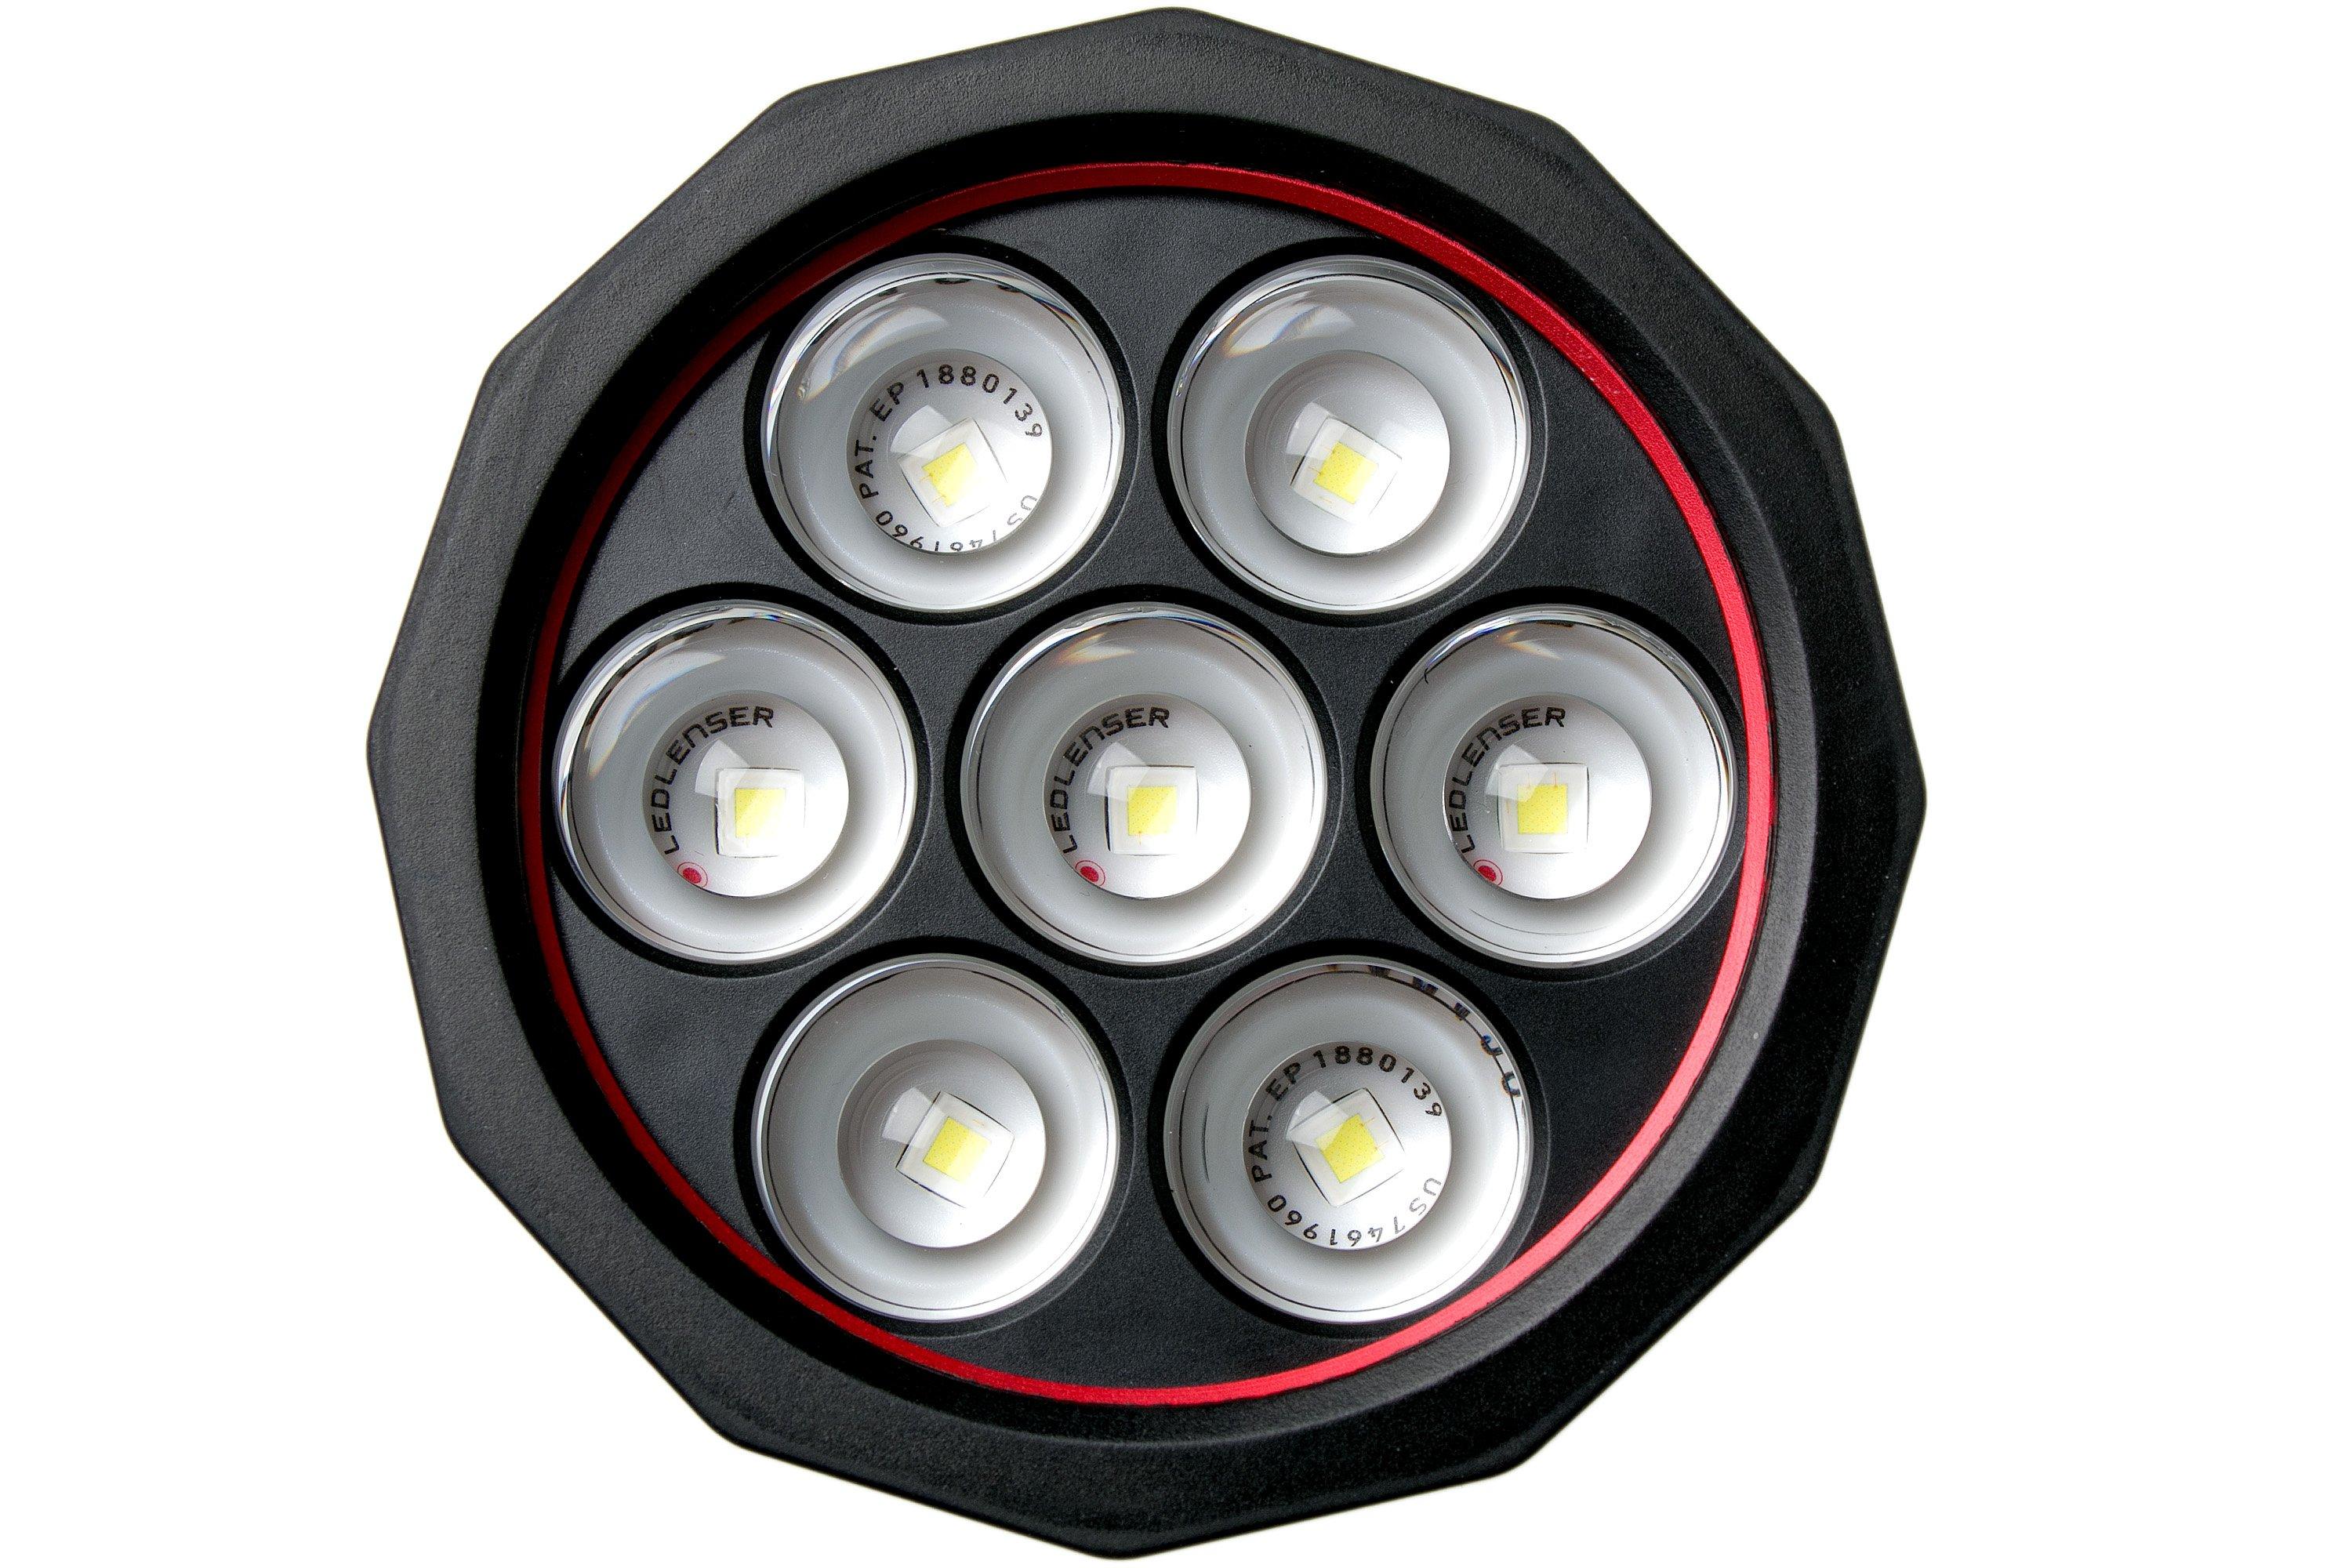 Ledlenser X21R Rechargeable High Output Flashlight